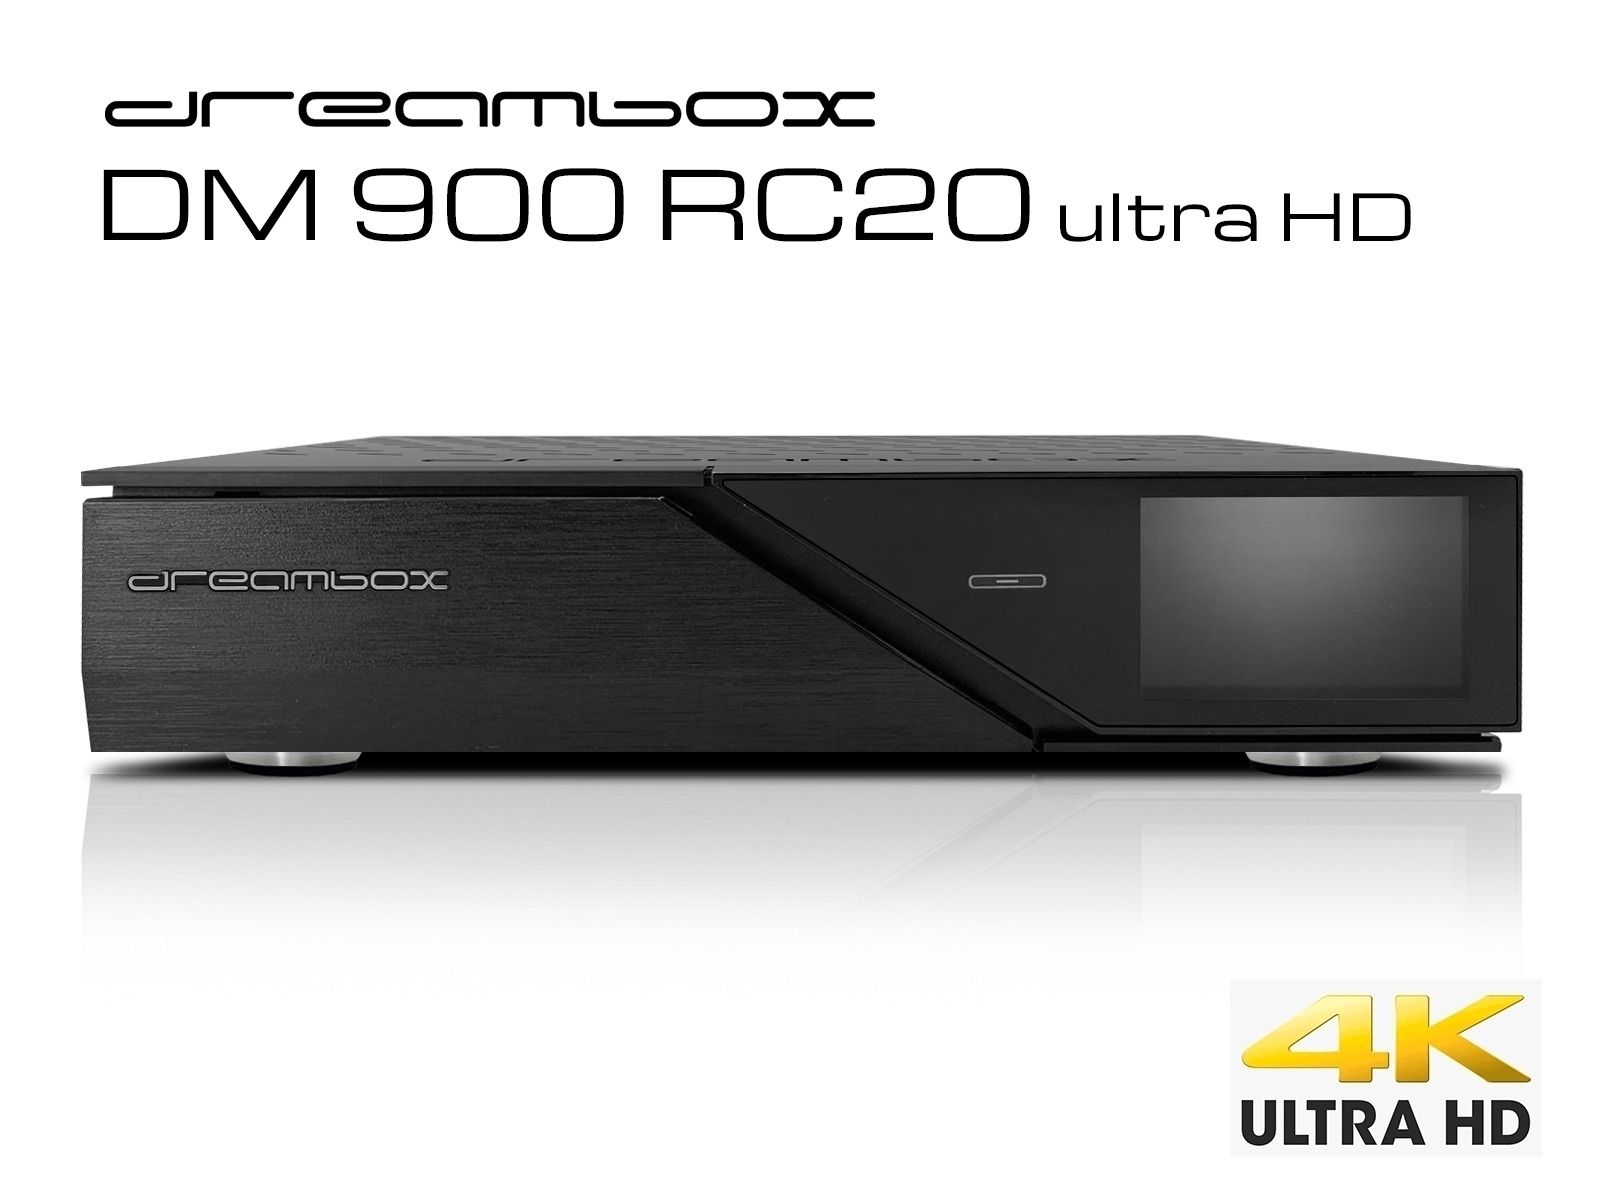 Dreambox DM900 RC20 UHD 4K  1x Dual DVB-S2X MS Tuner 2 TB HDD E2 Linux PVR Receiver von Dreambox